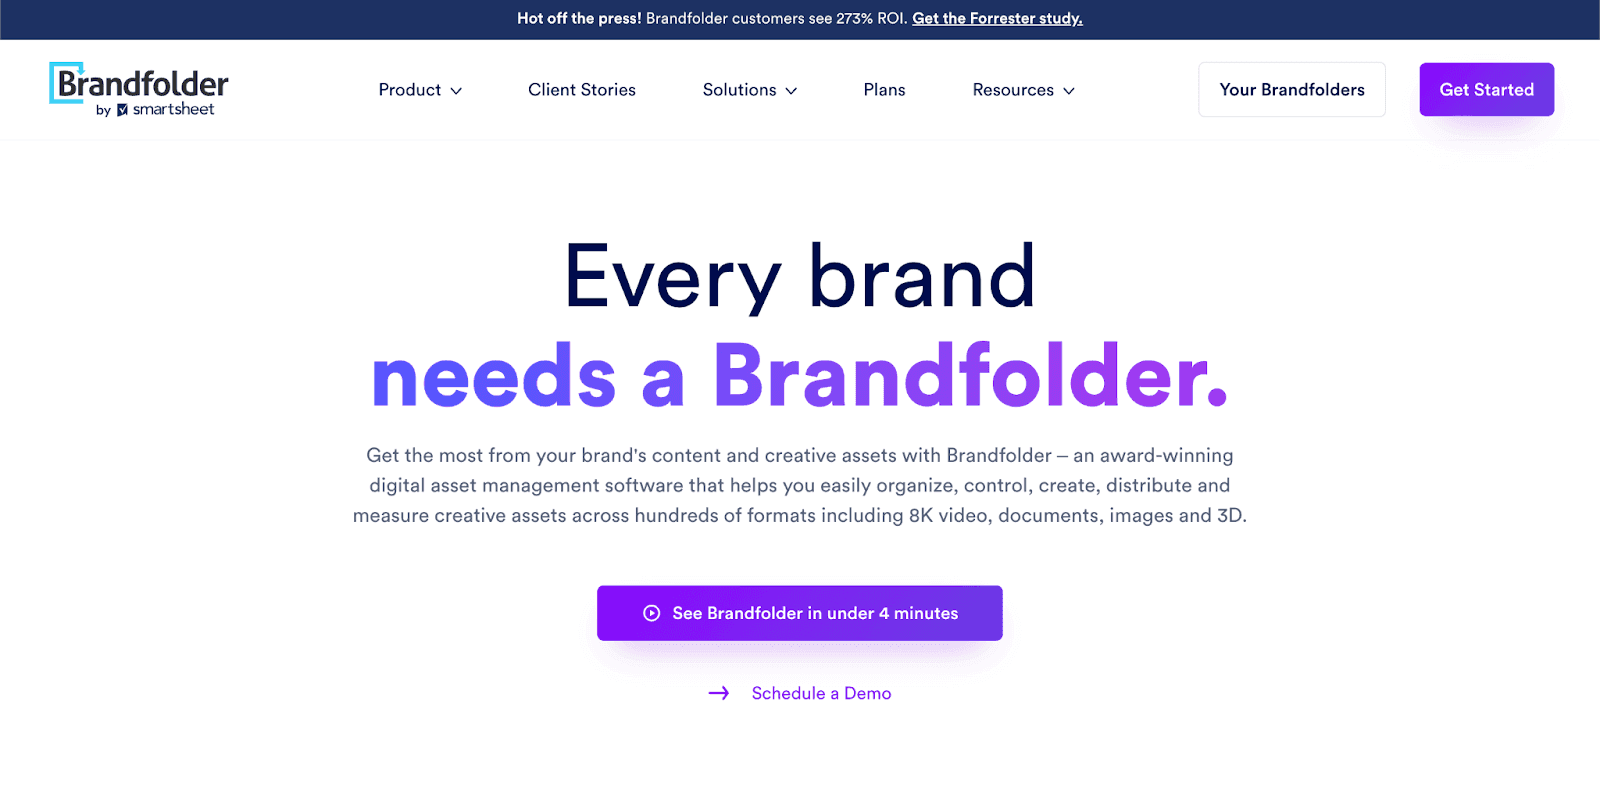 Brandfolder helps marketing teams distribute creative assets across different formats